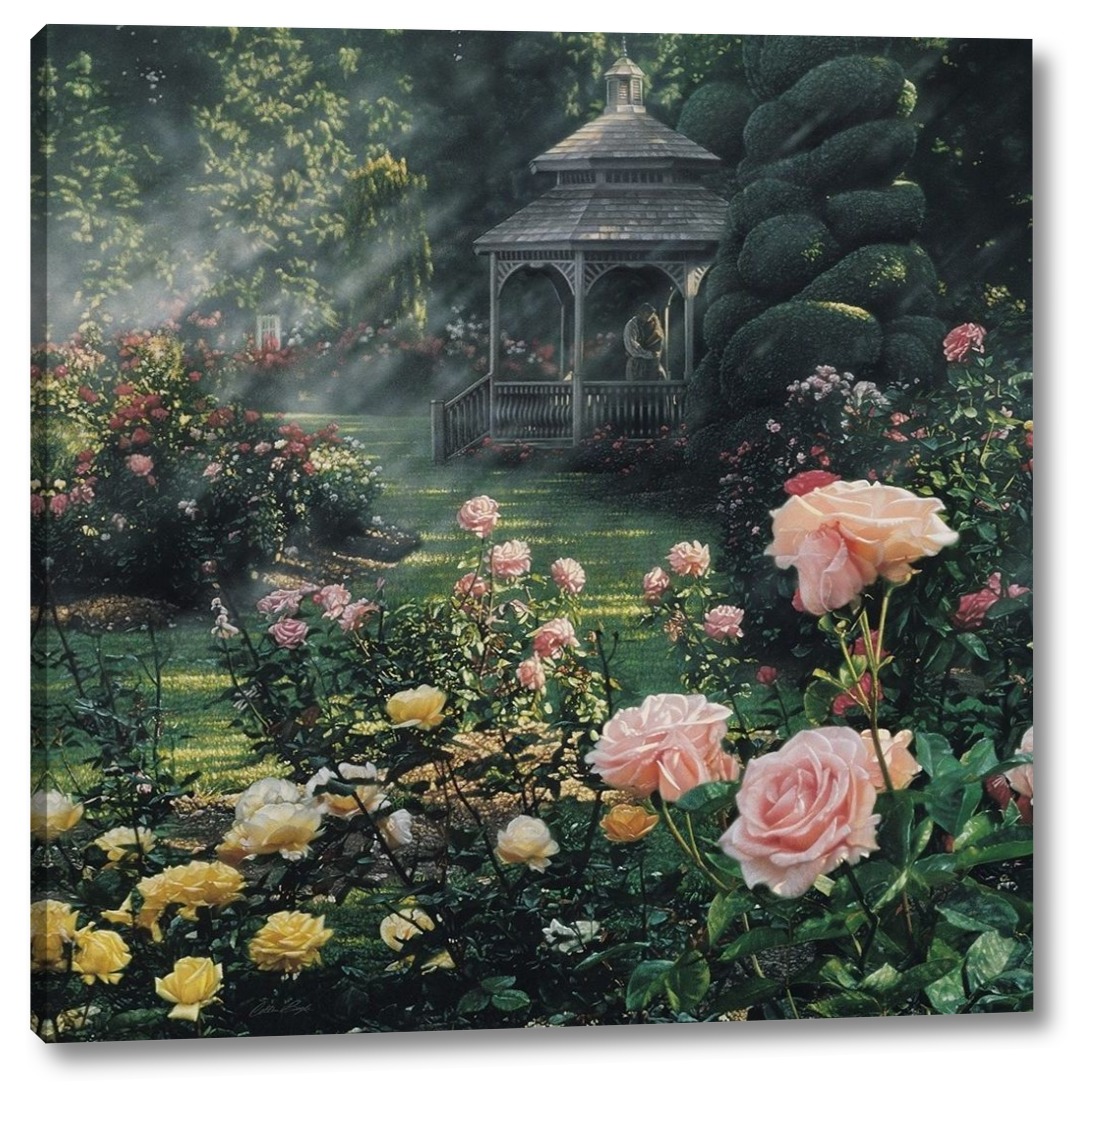 Rose Garden Paradise Found Square By Collin Bogle Printart Com